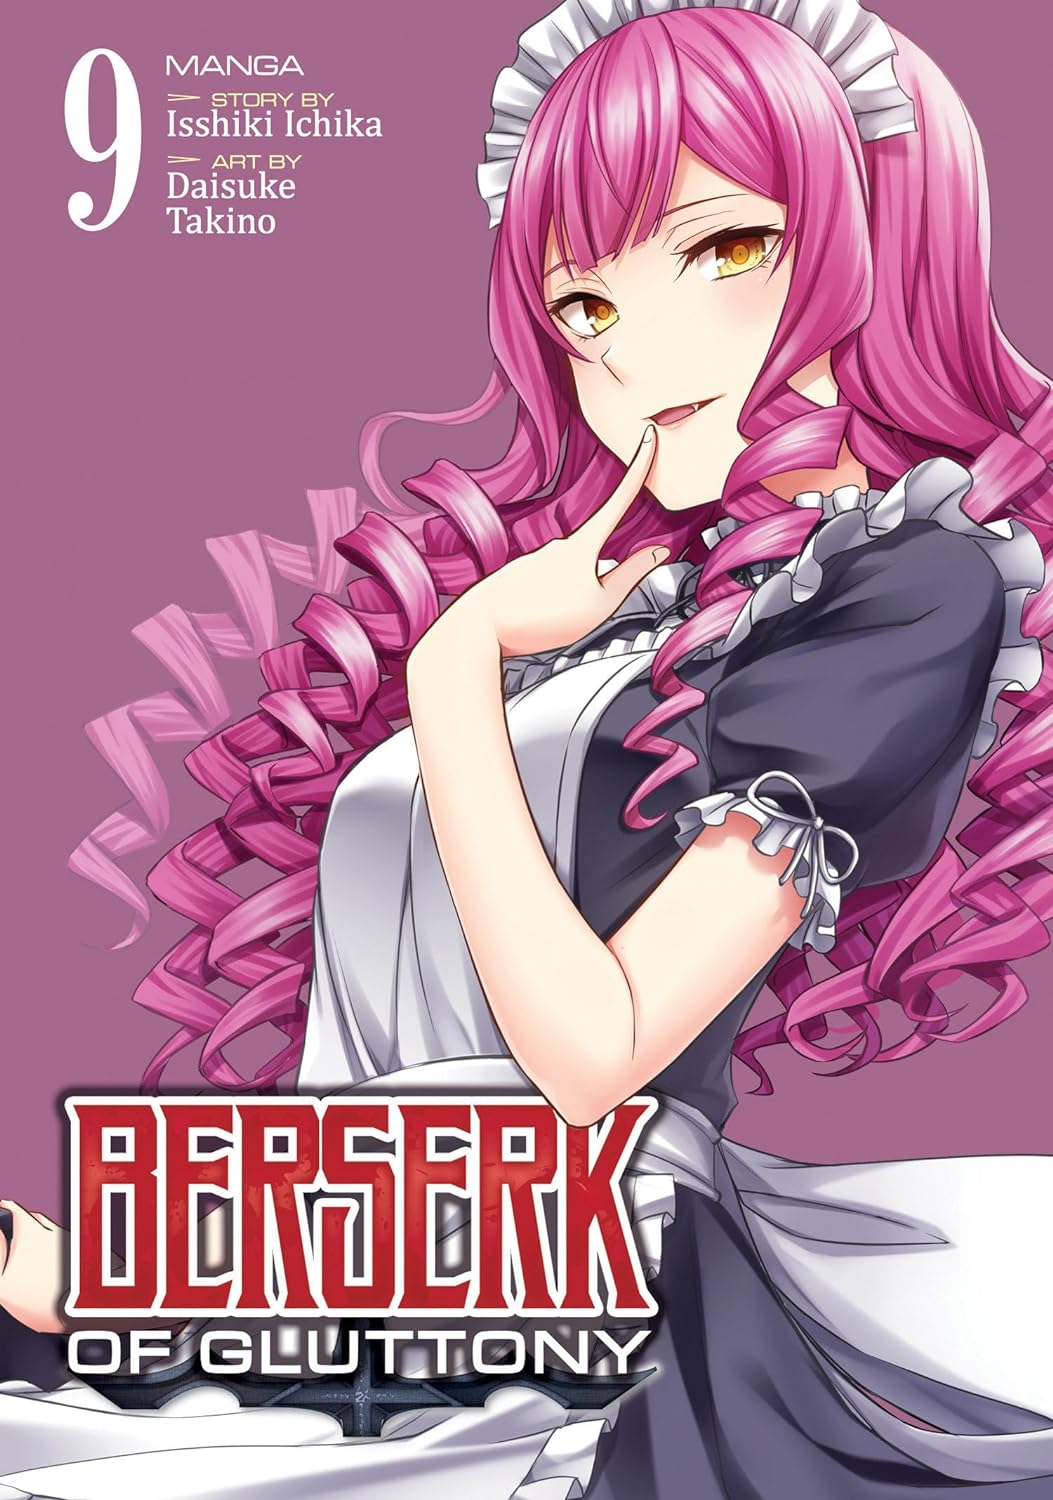 Berserk of Gluttony (Manga) Vol. 09